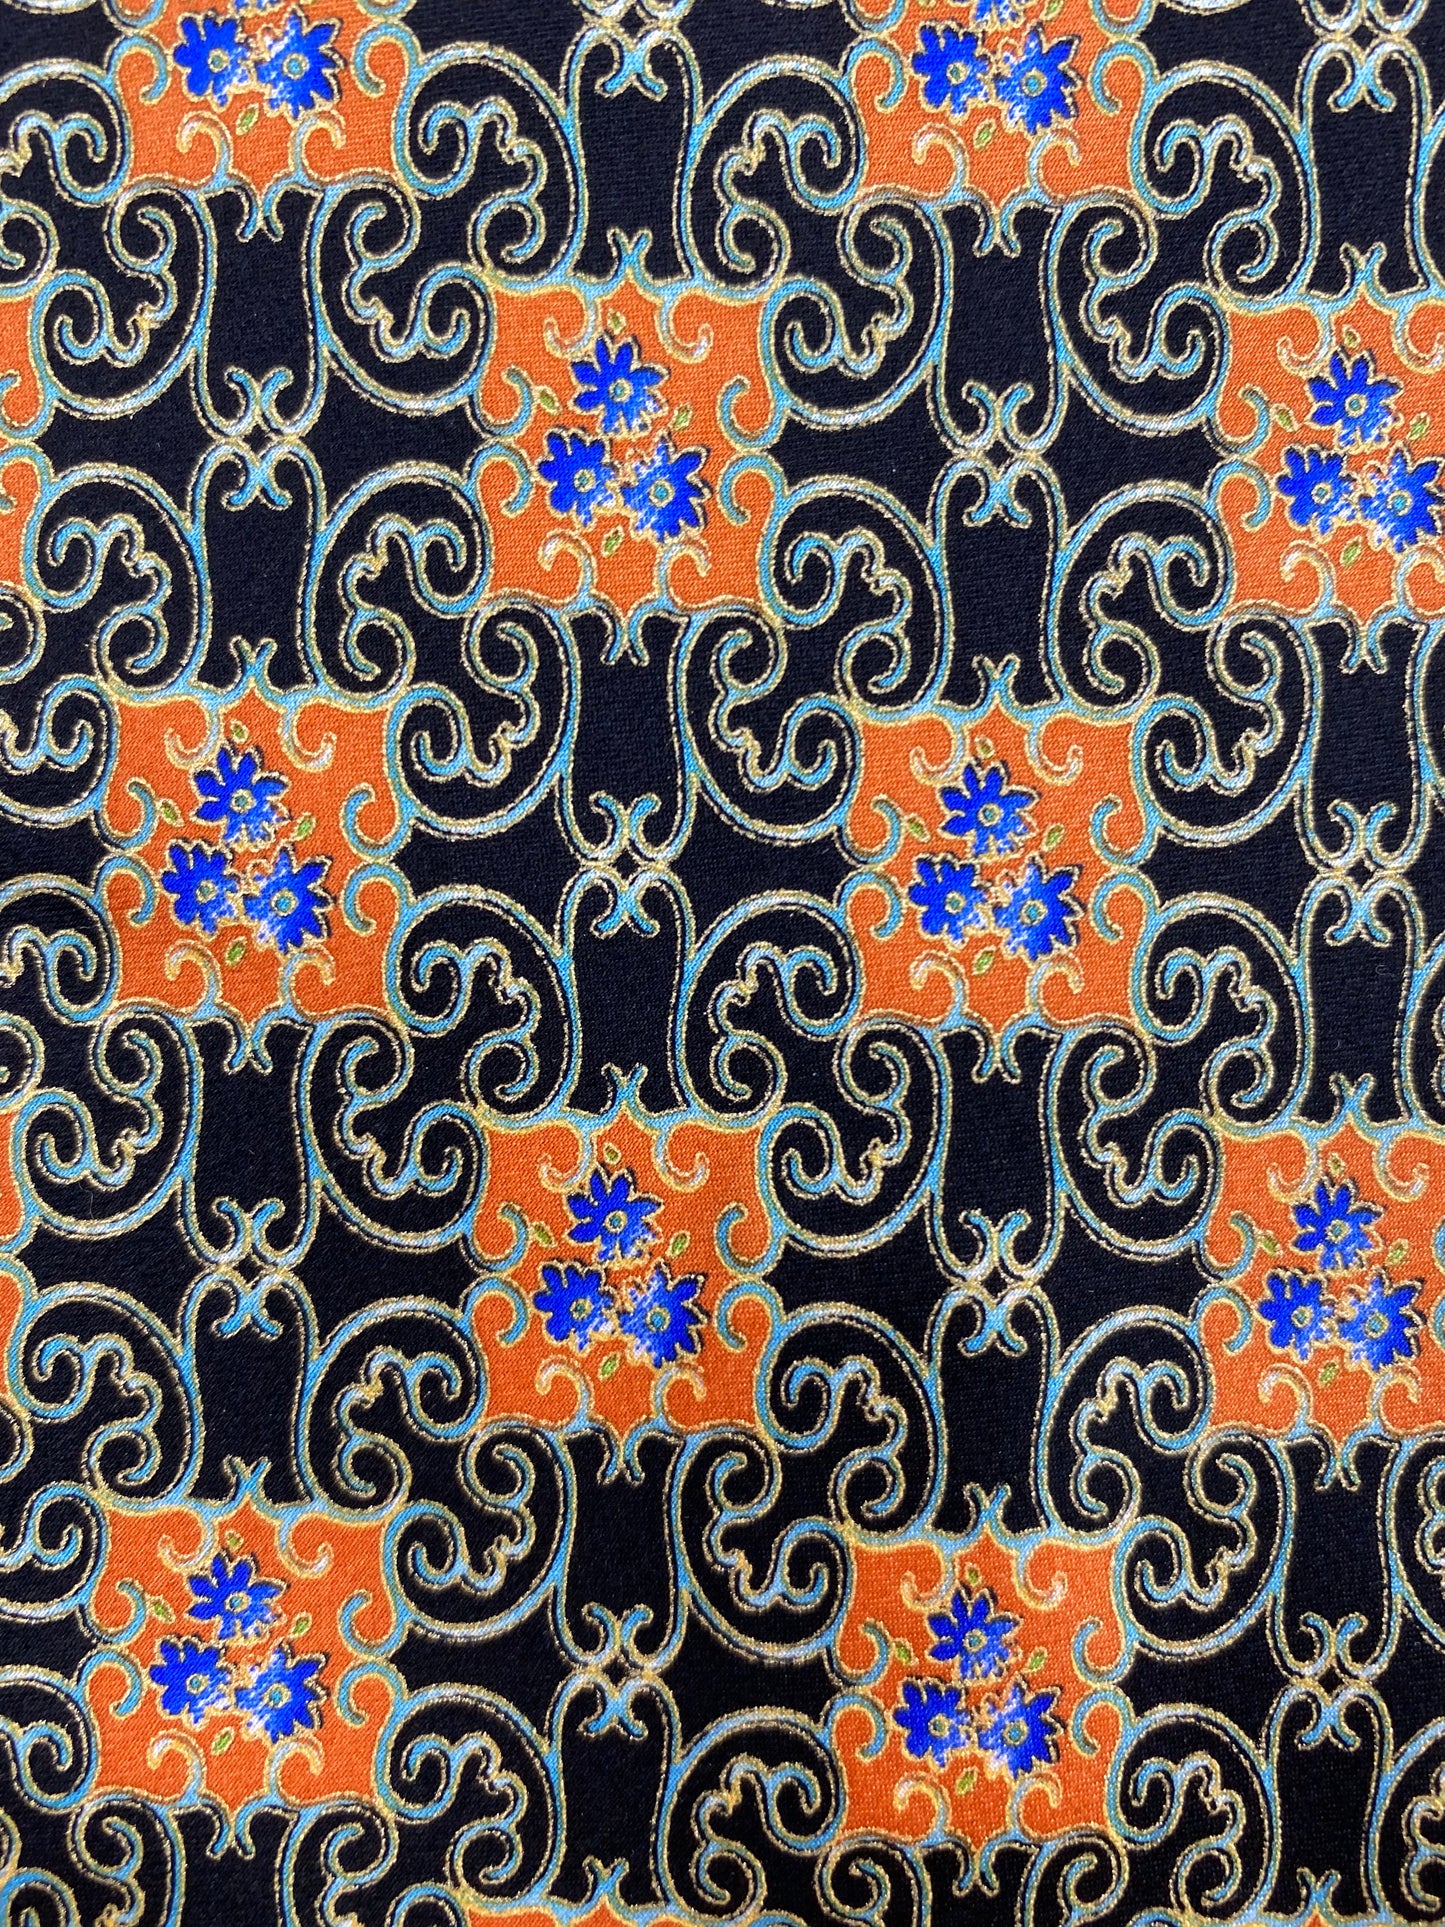 Close-up detail of: 90s Deadstock Silk Necktie, Men's Vintage Orange/ Black/ Blue Moroccan Pattern Tie, NOS